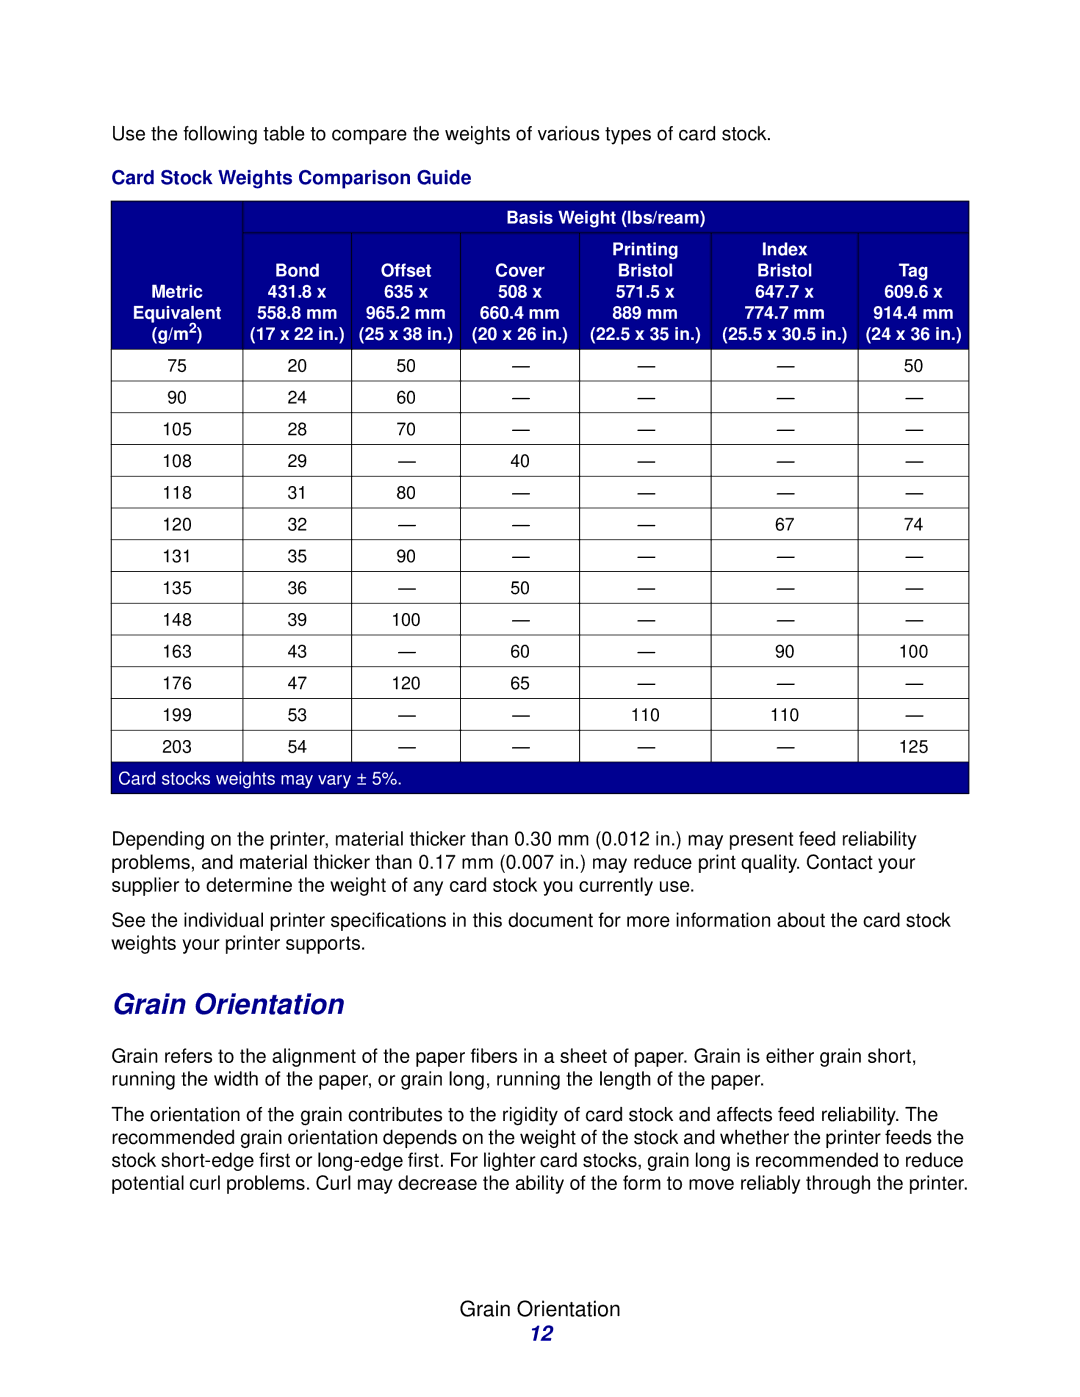 Lexmark Laser Printers manual Grain Orientation, Card Stock Weights Comparison Guide, 20 x 26 22.5 x 35 25.5 x 30.5 24 x 36 